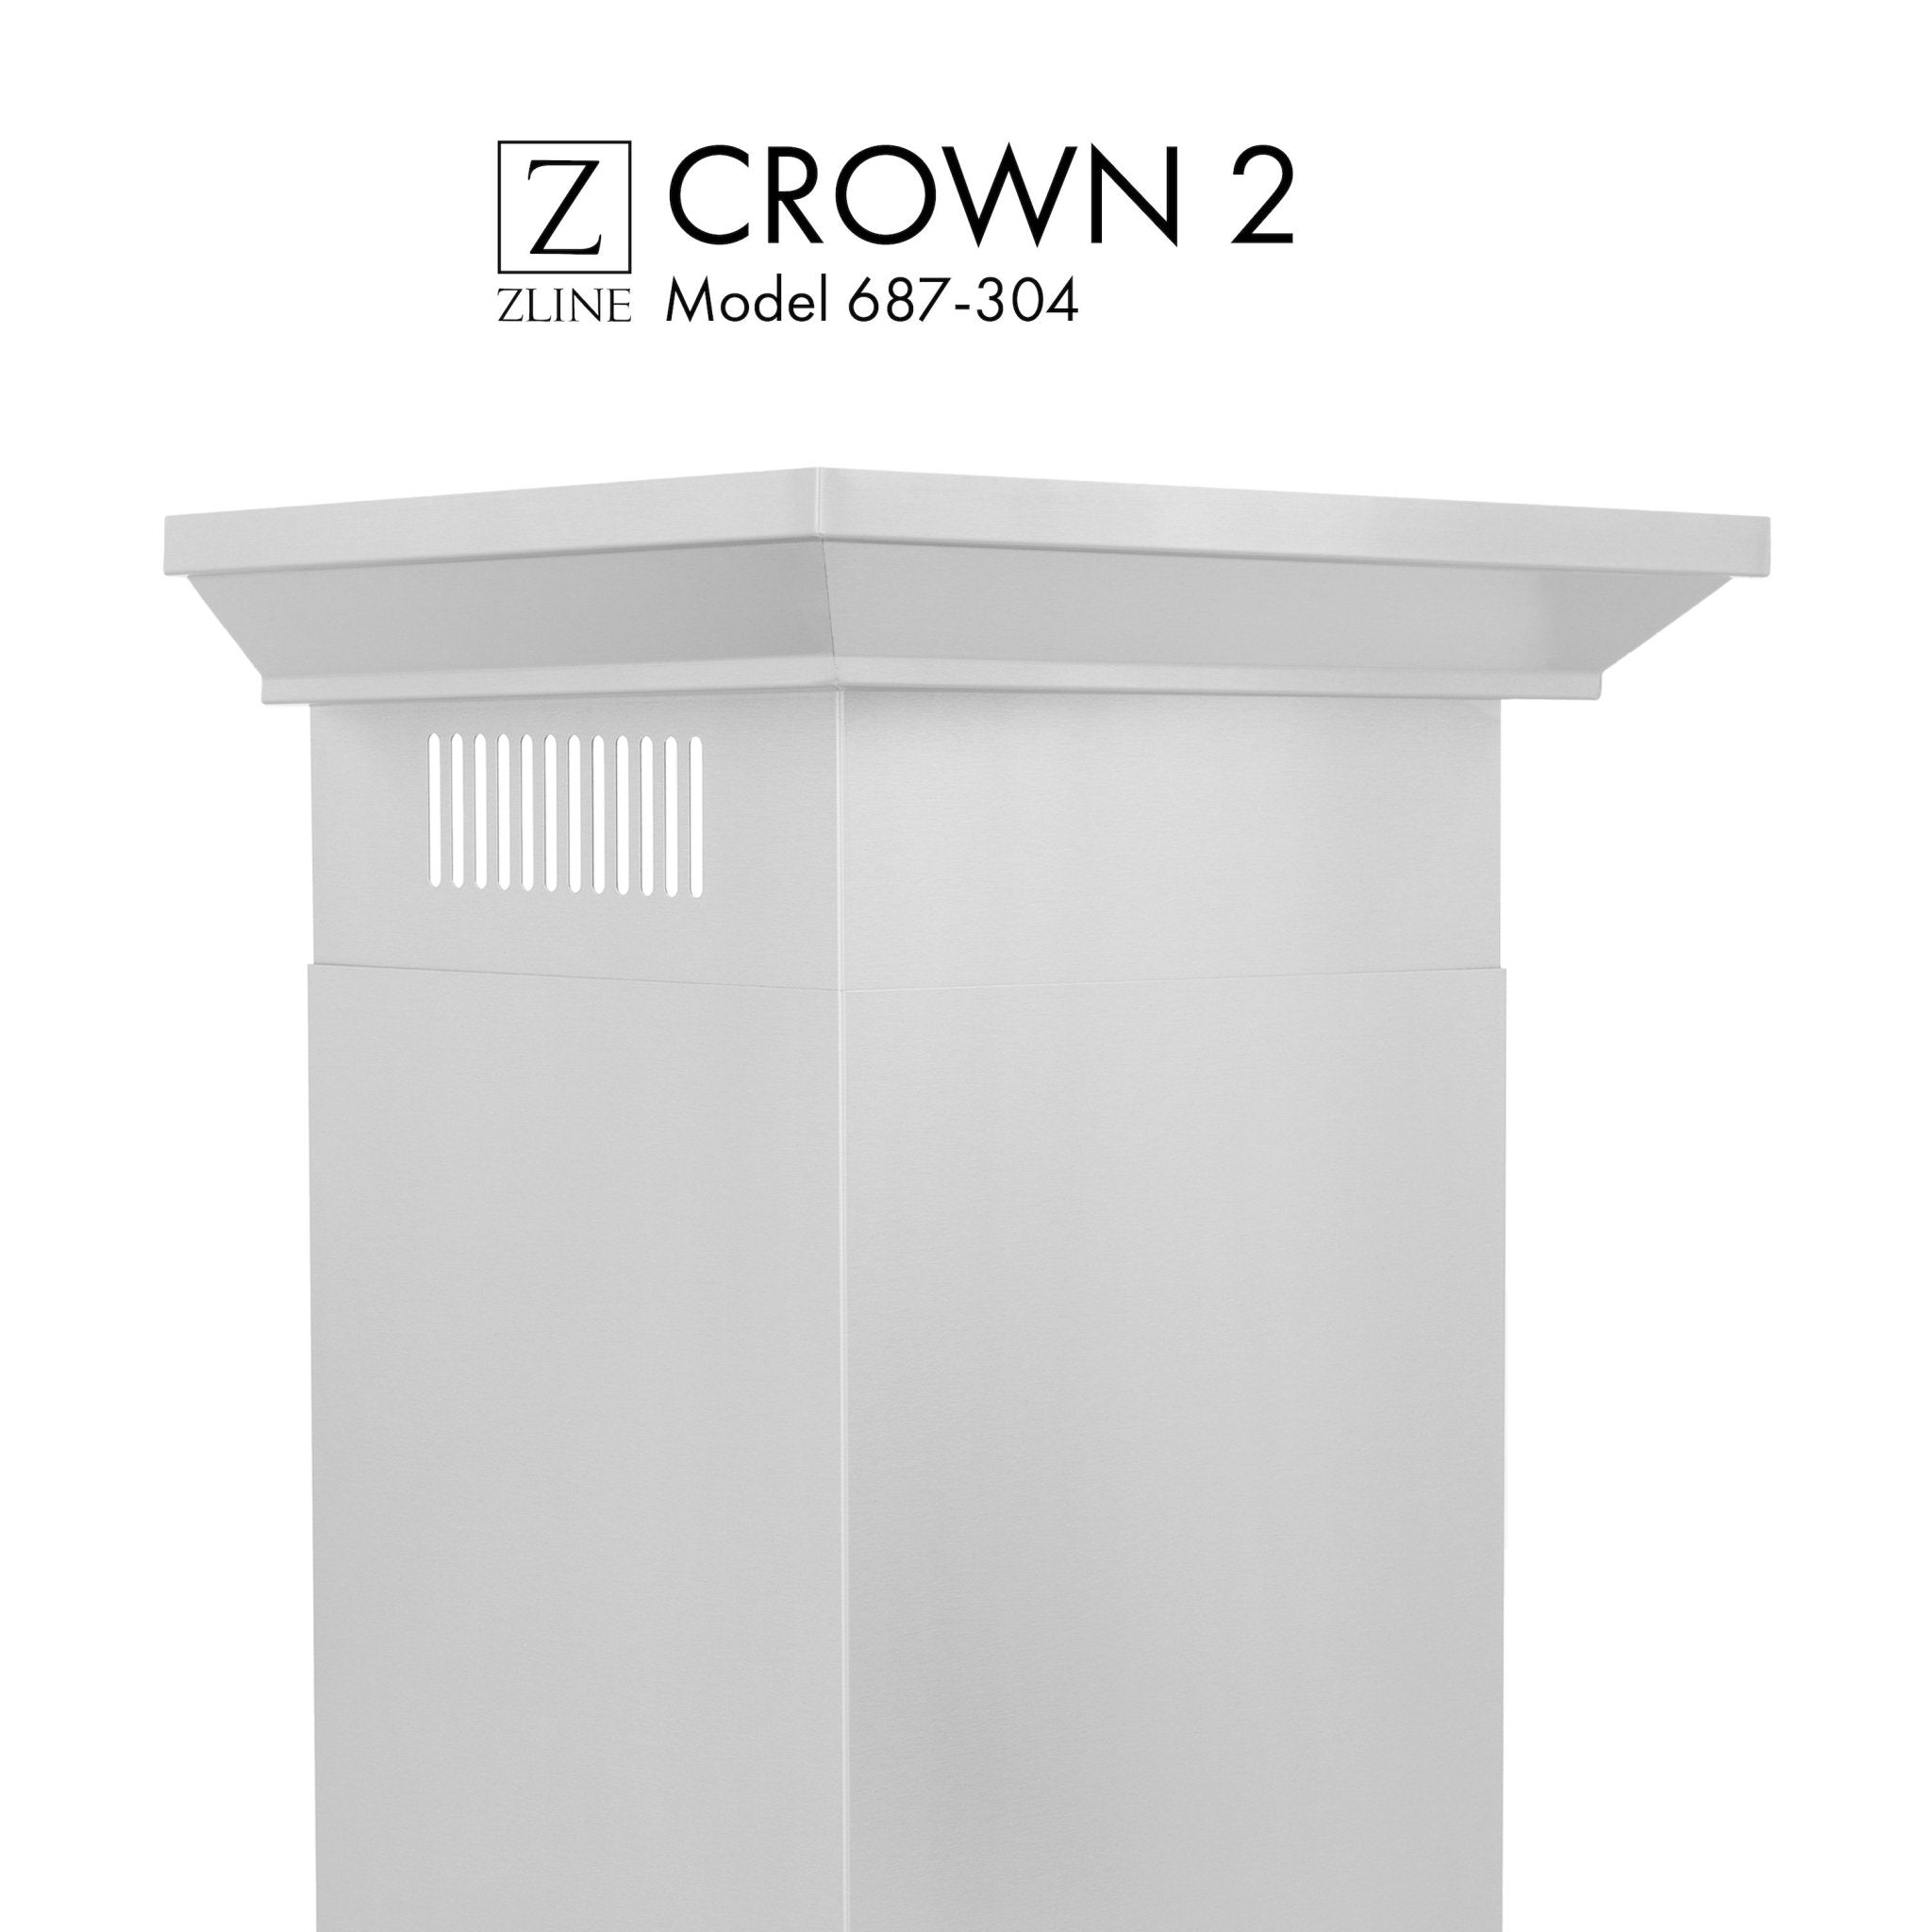 ZLINE Crown Molding Profile 2 for Wall Mount Range Hood (CM2-687-304) - Rustic Kitchen & Bath - Crown Molding - ZLINE Kitchen and Bath